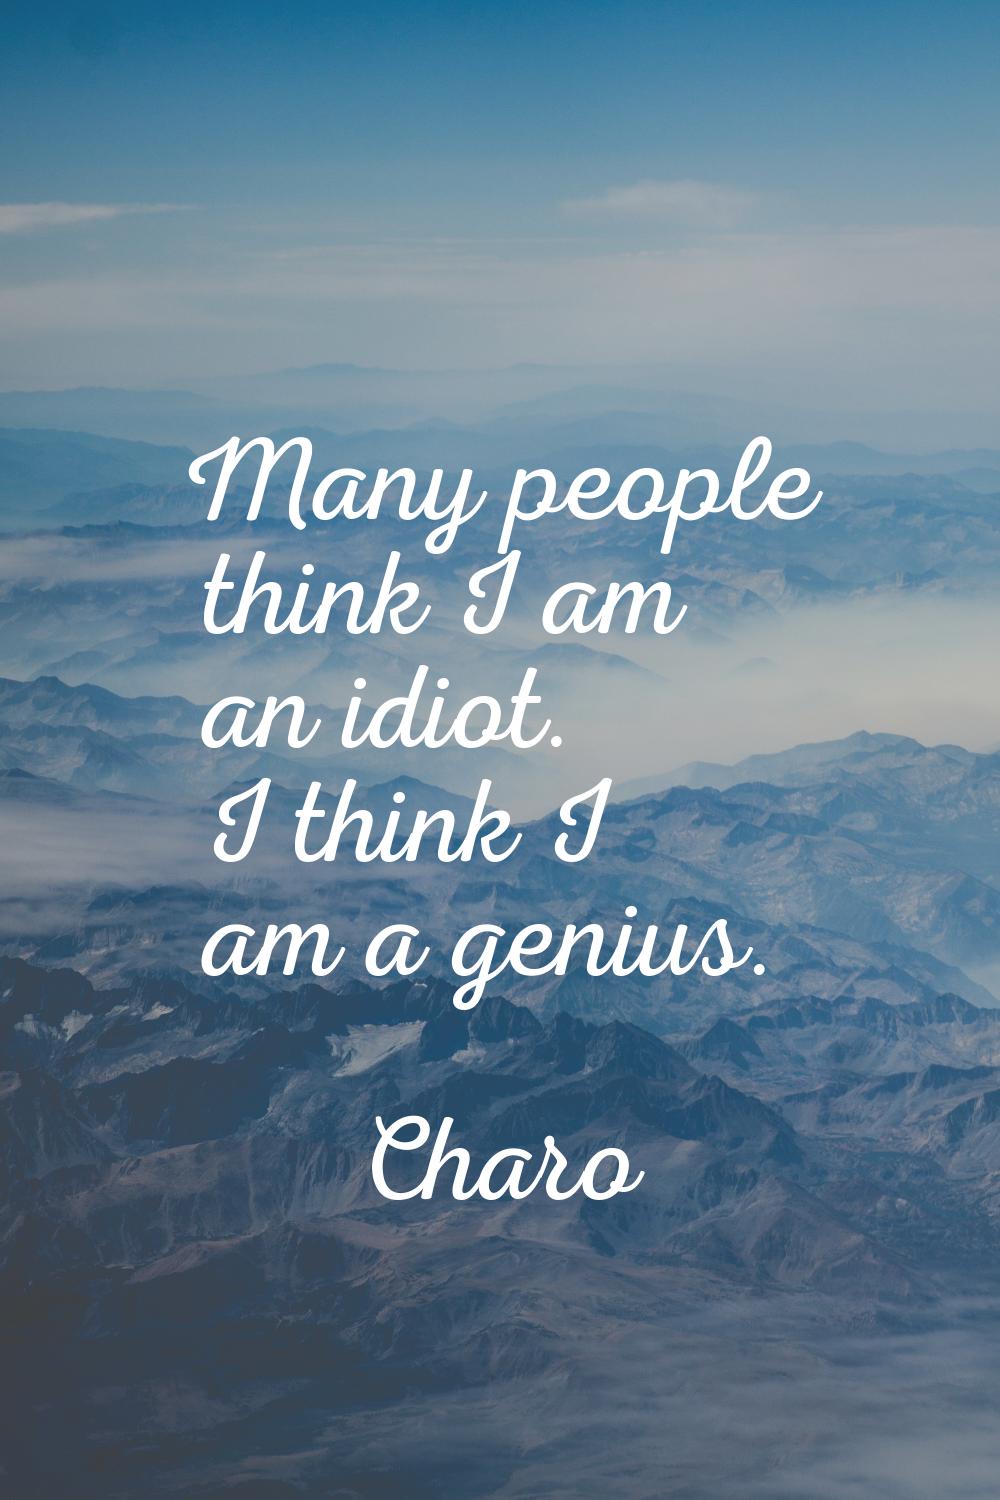 Many people think I am an idiot. I think I am a genius.